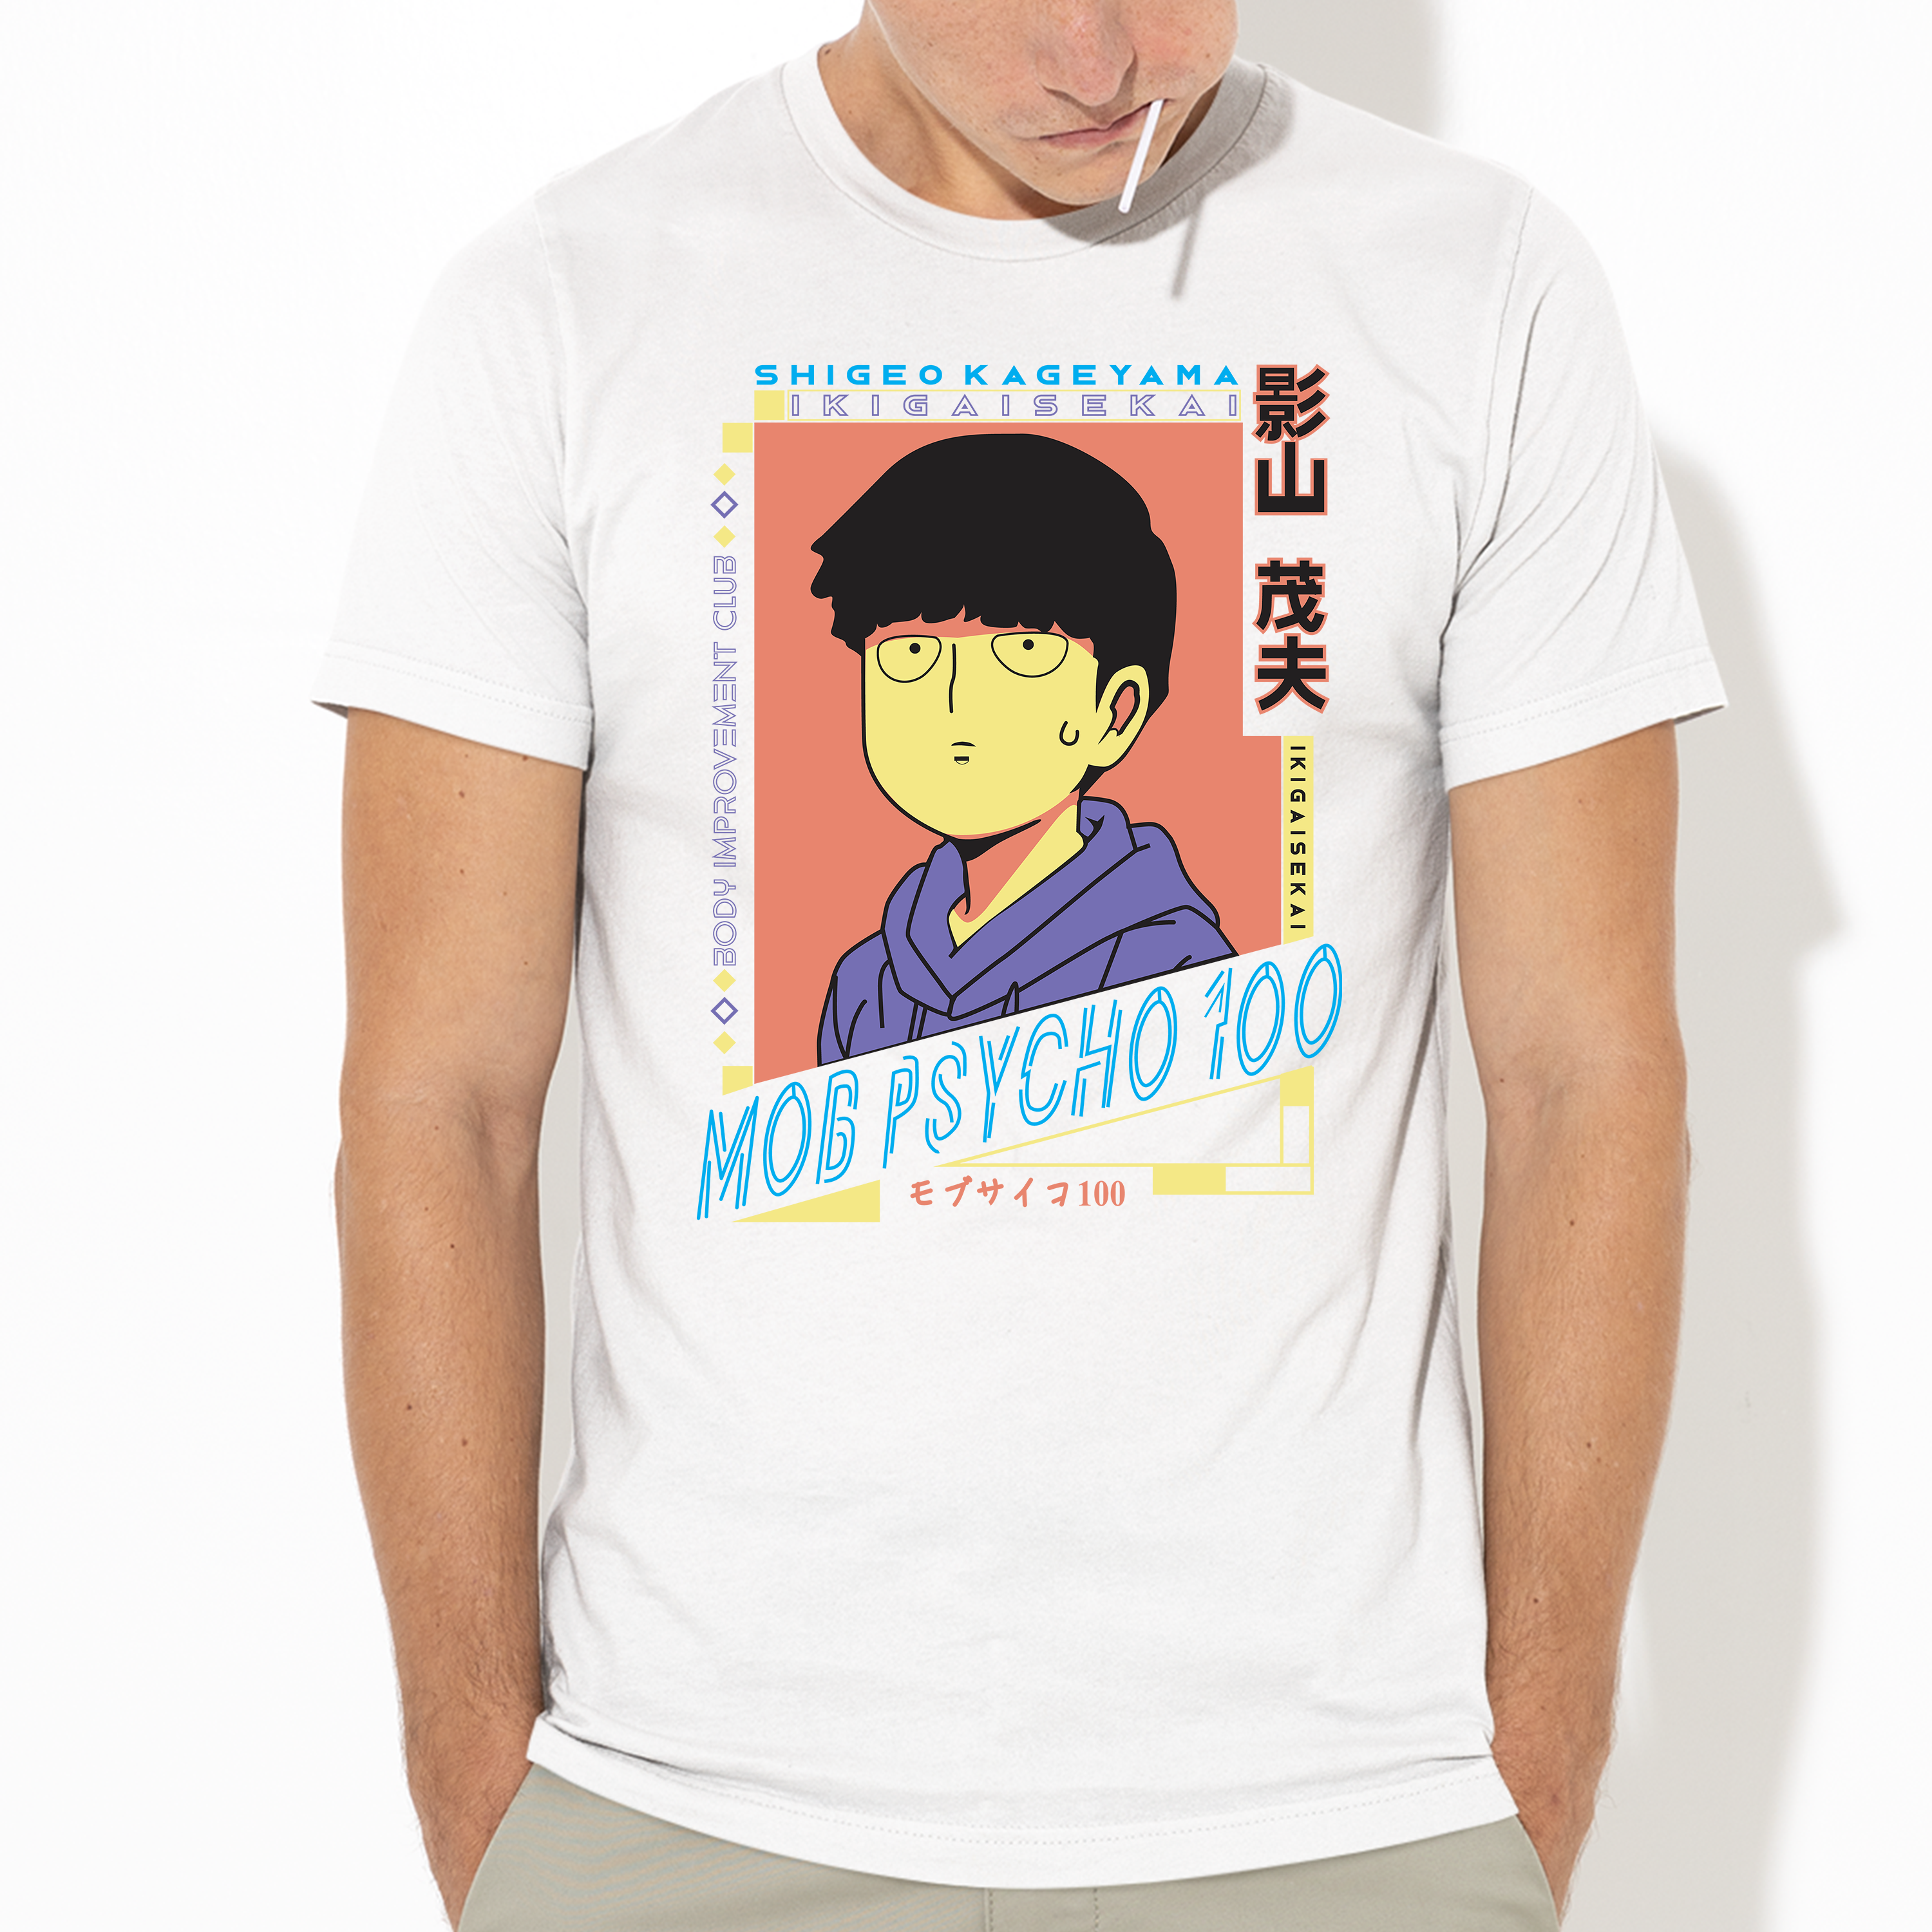 Camiseta Anime Mob Psycho 100 - Regata